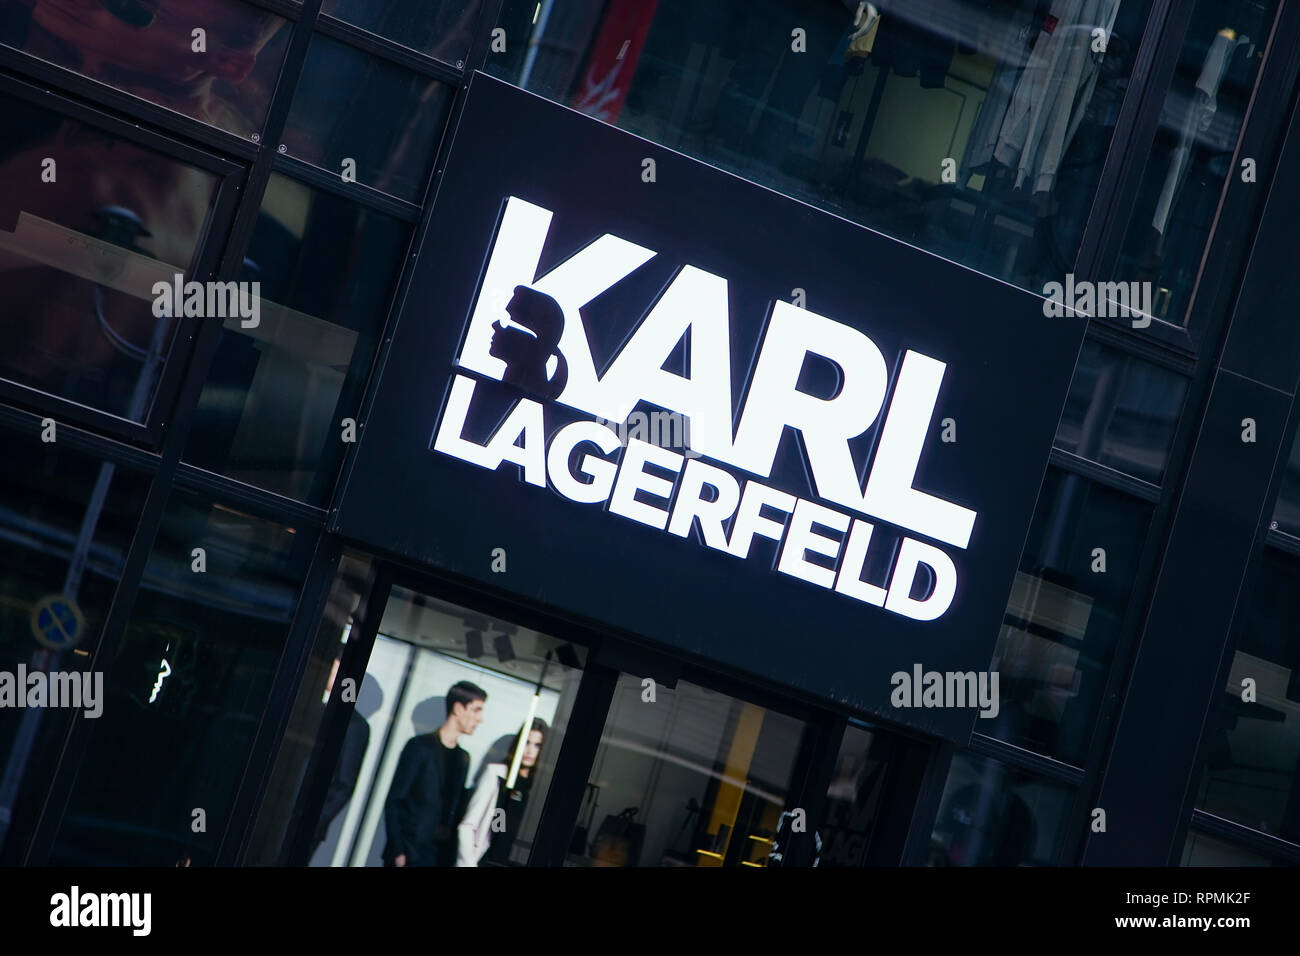 Germany, Berlin, Mitte, Friedrichstrasse, Karl Lagerfeld fashion shop sign. Stock Photo